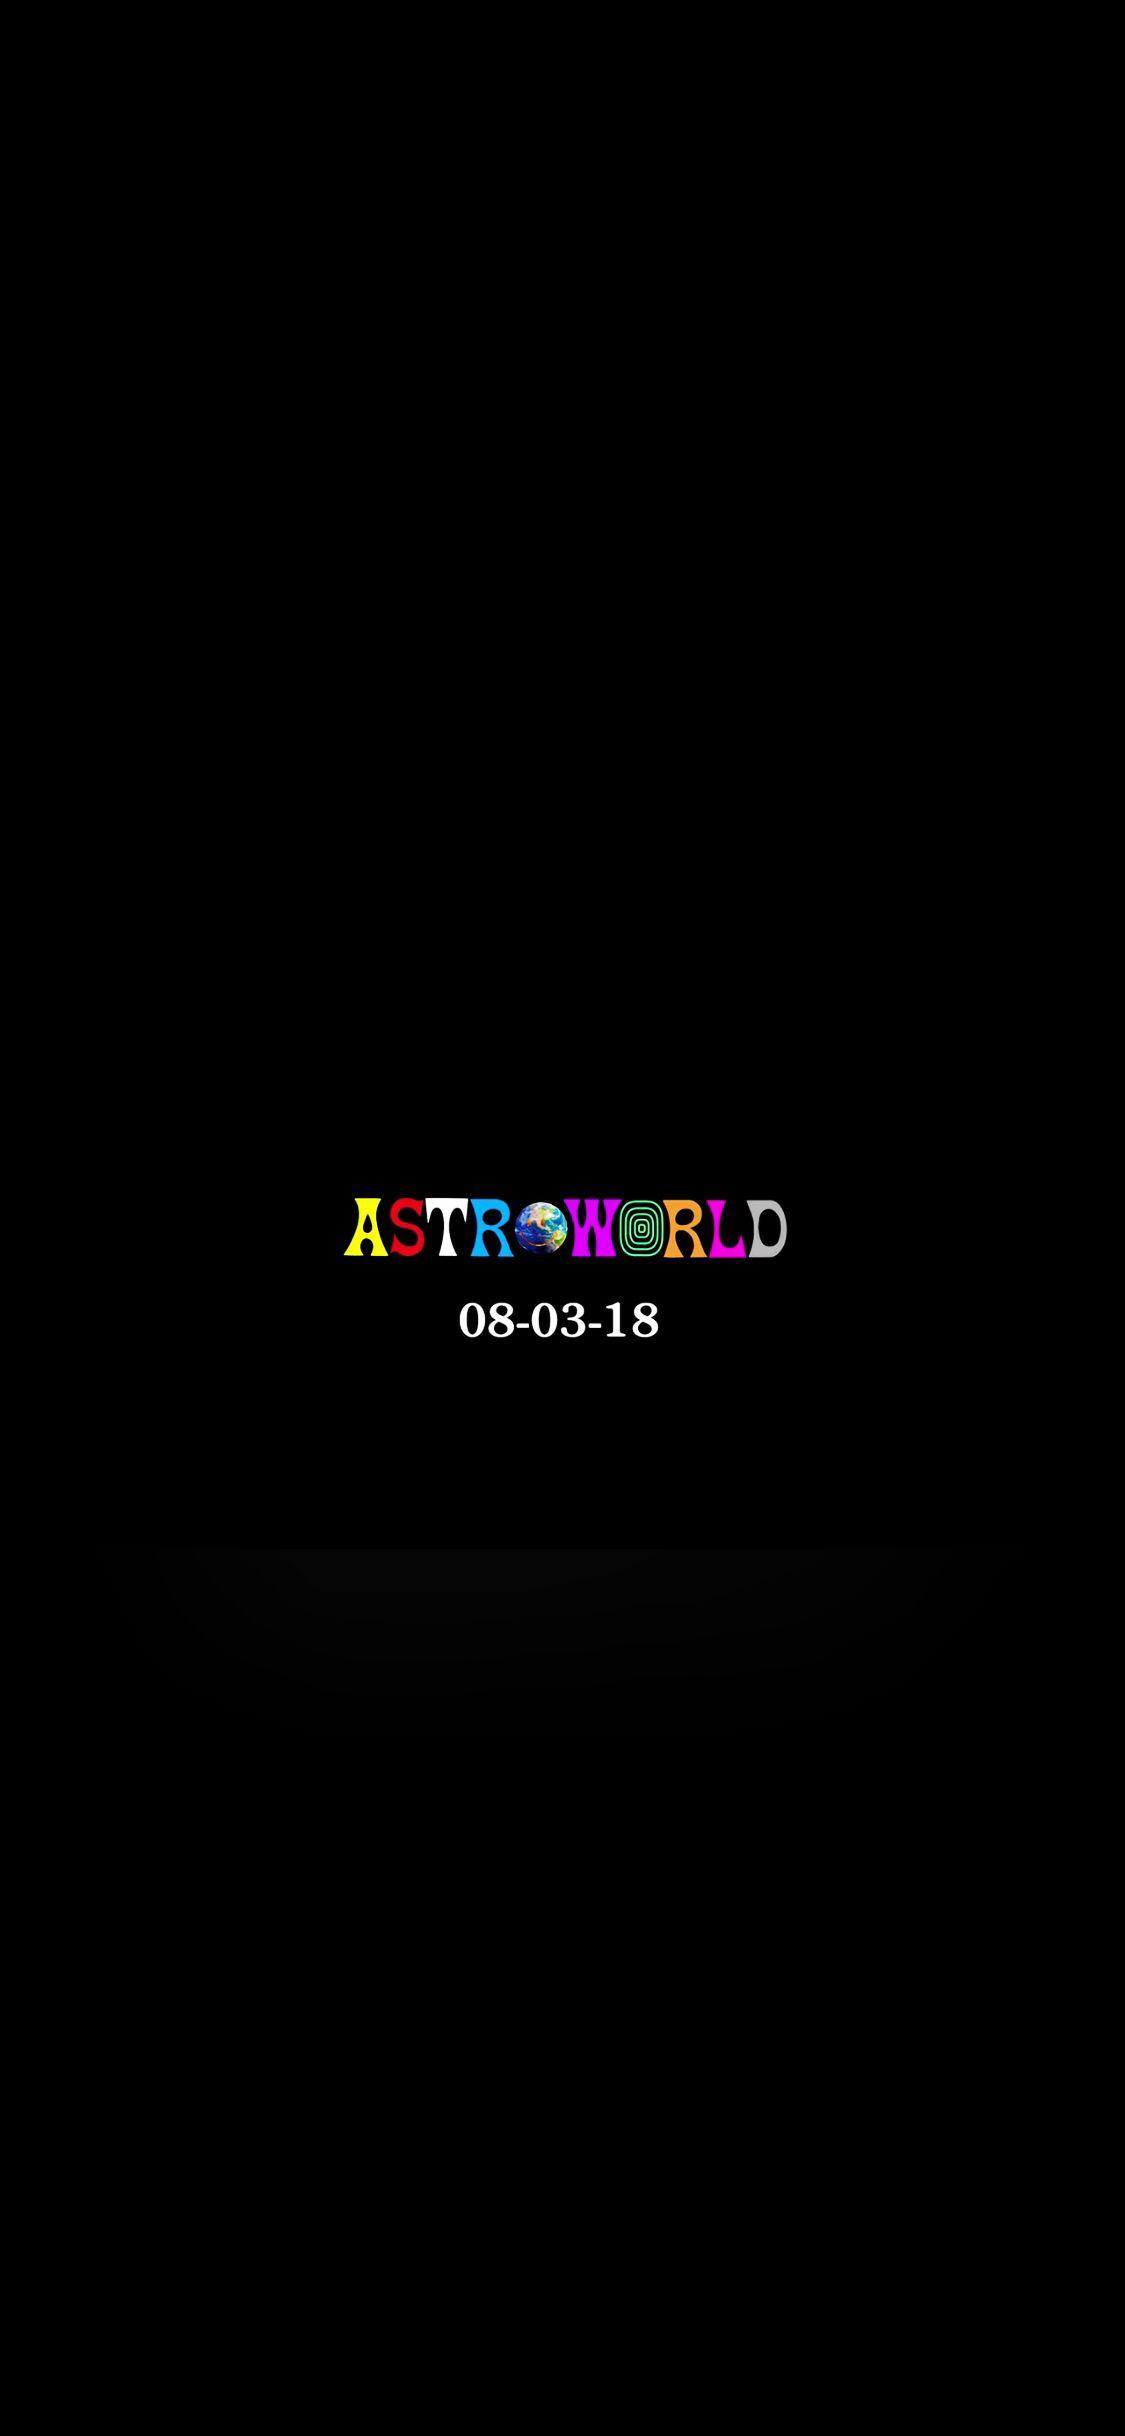 Astroworld Logo - Astroworld Wallpaper from Apple Music trailer (iPhone X) : travisscott